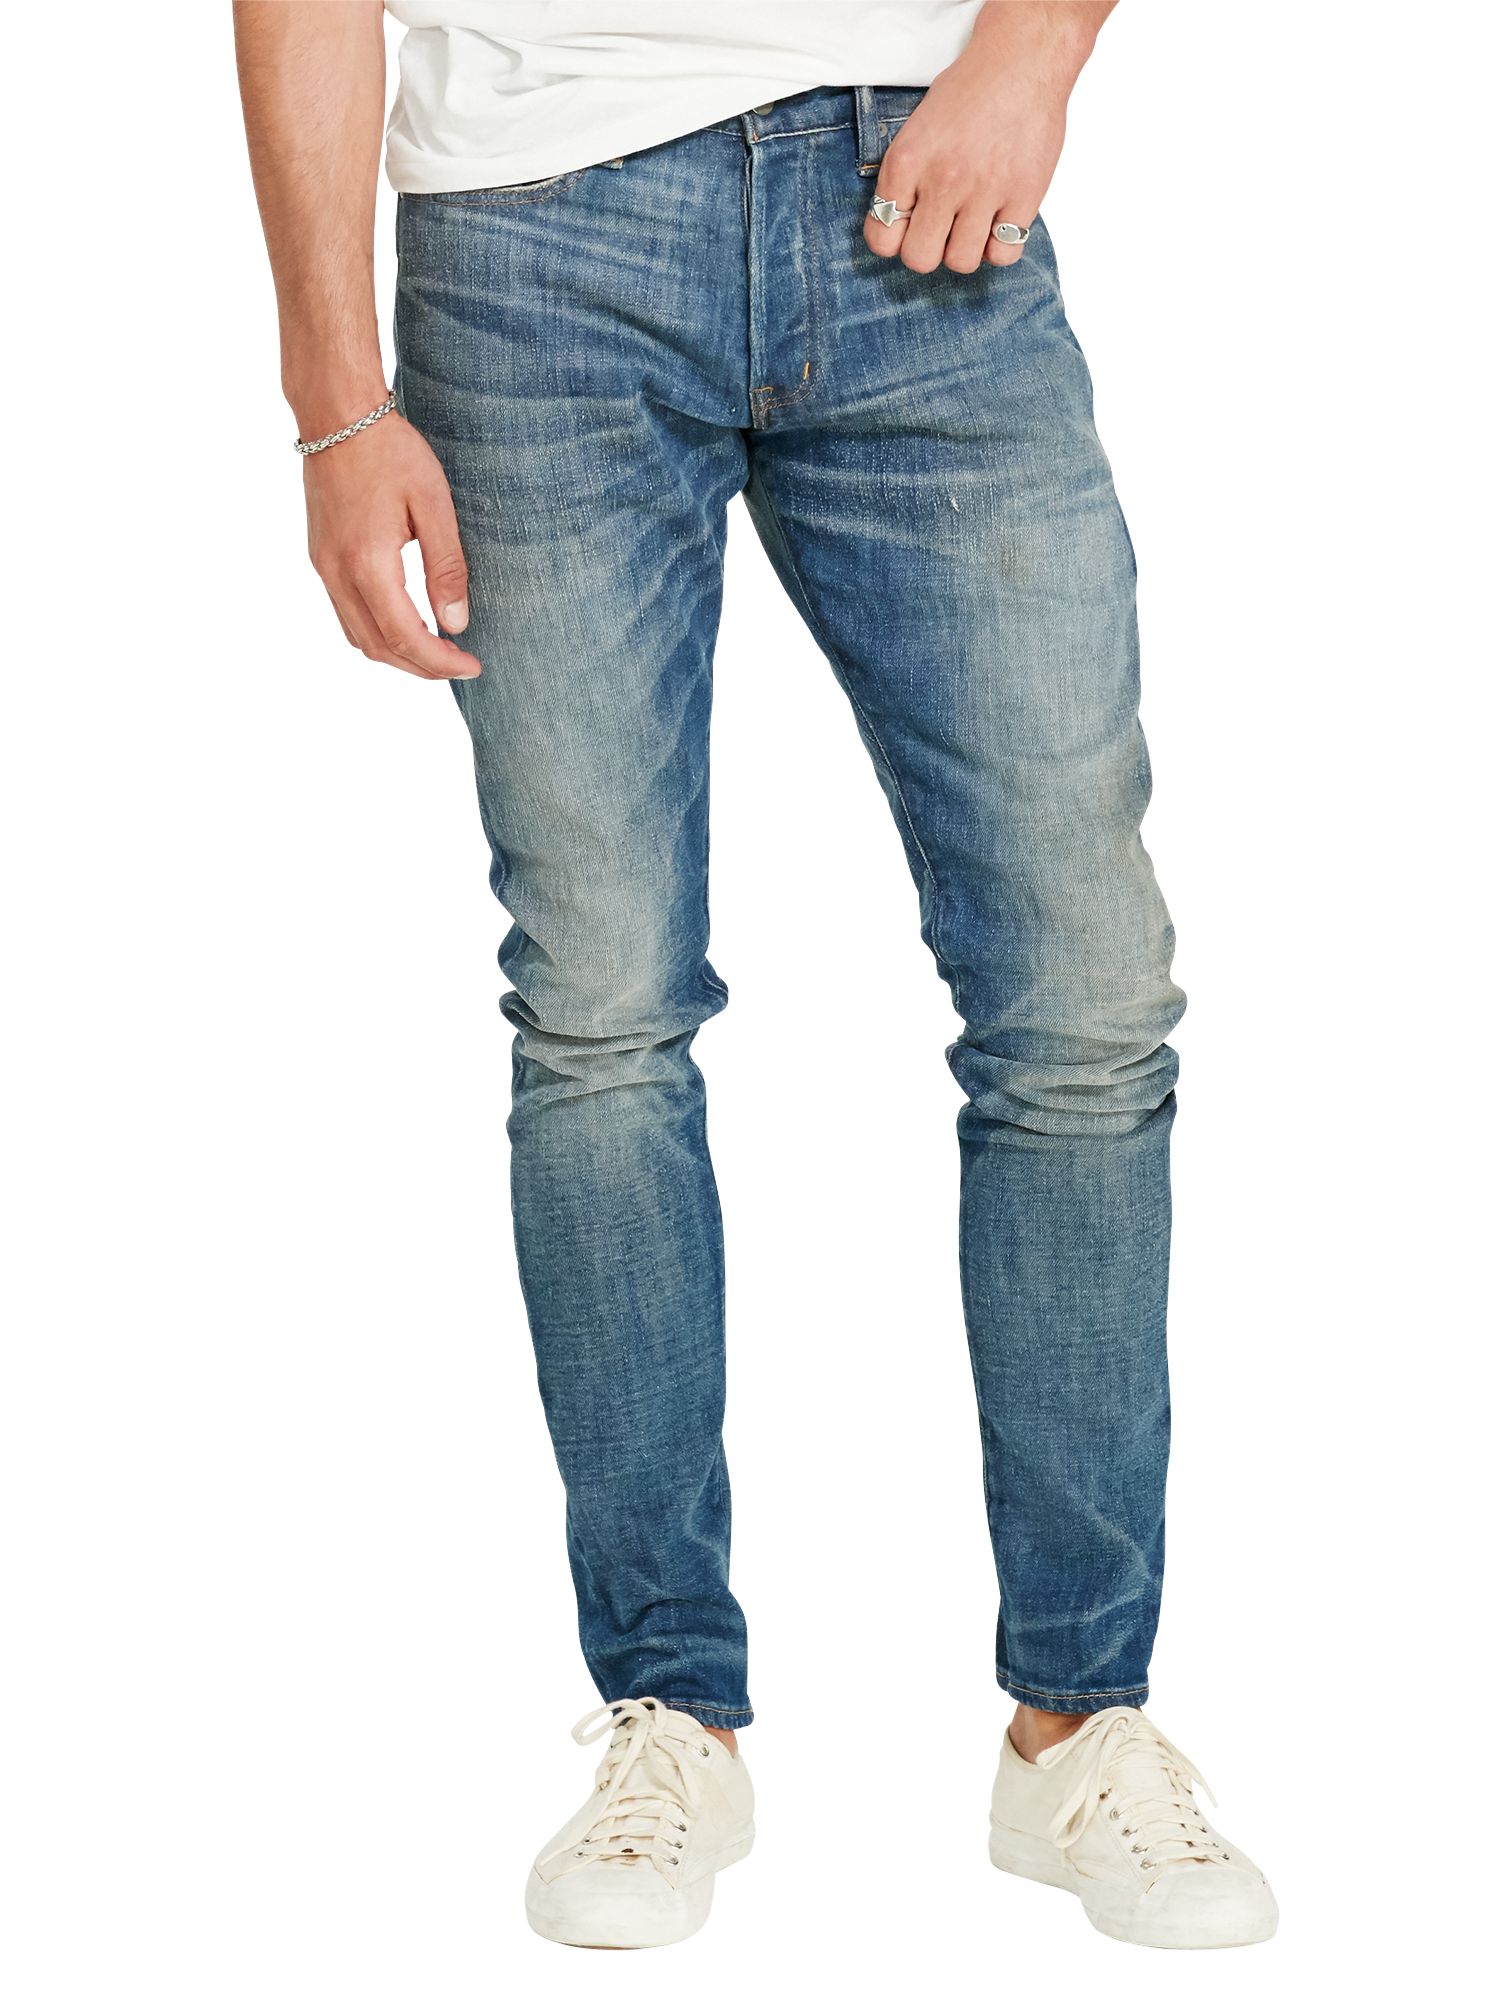 Denim & Supply Ralph Lauren Slim Fit Jeans, Hale at John Lewis & Partners